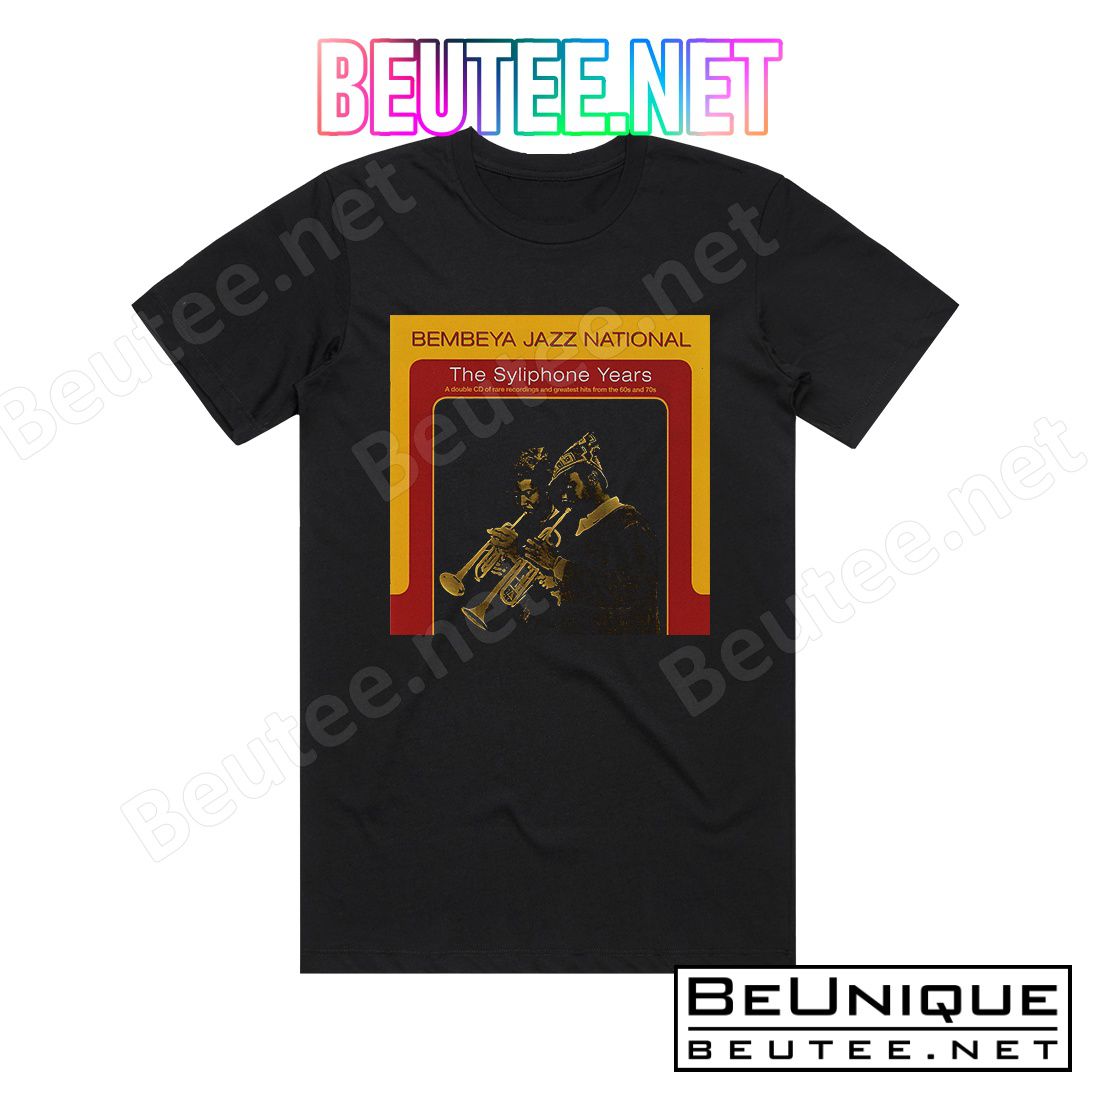 Bembeya Jazz National The Syliphone Years 1 Album Cover T-Shirt